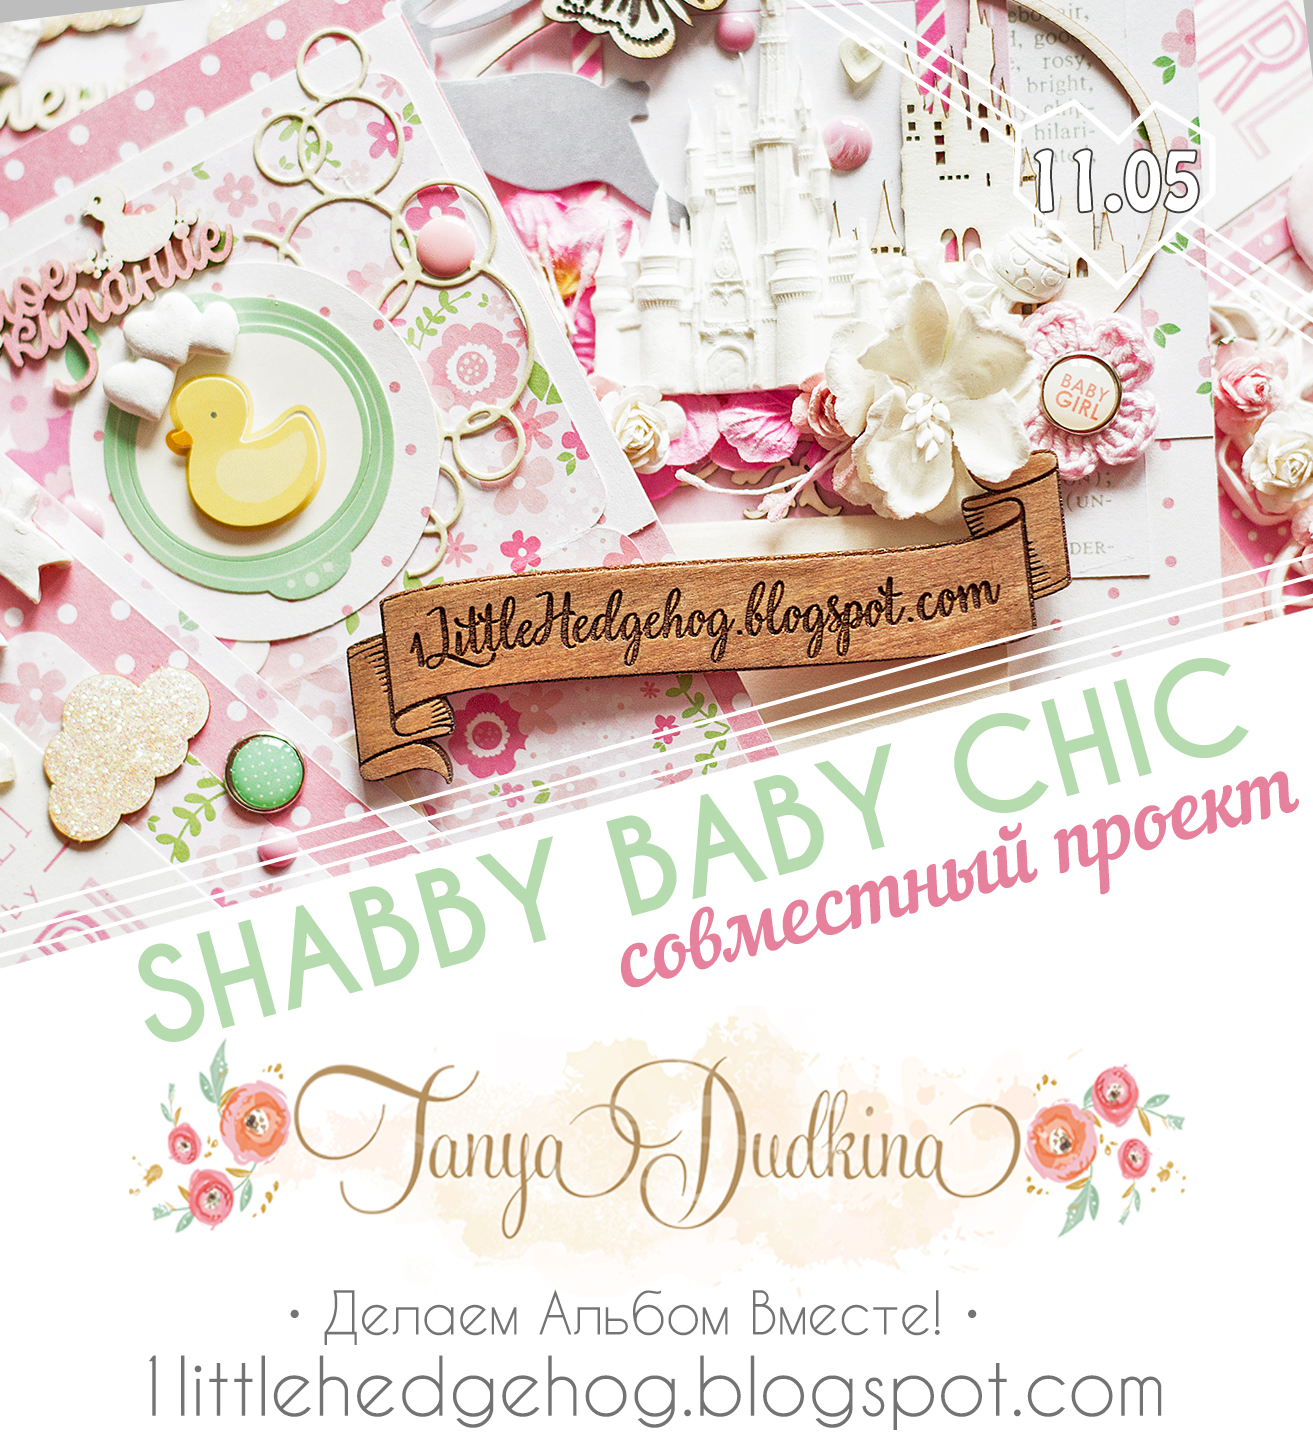 СП "Shabby Baby Chic"